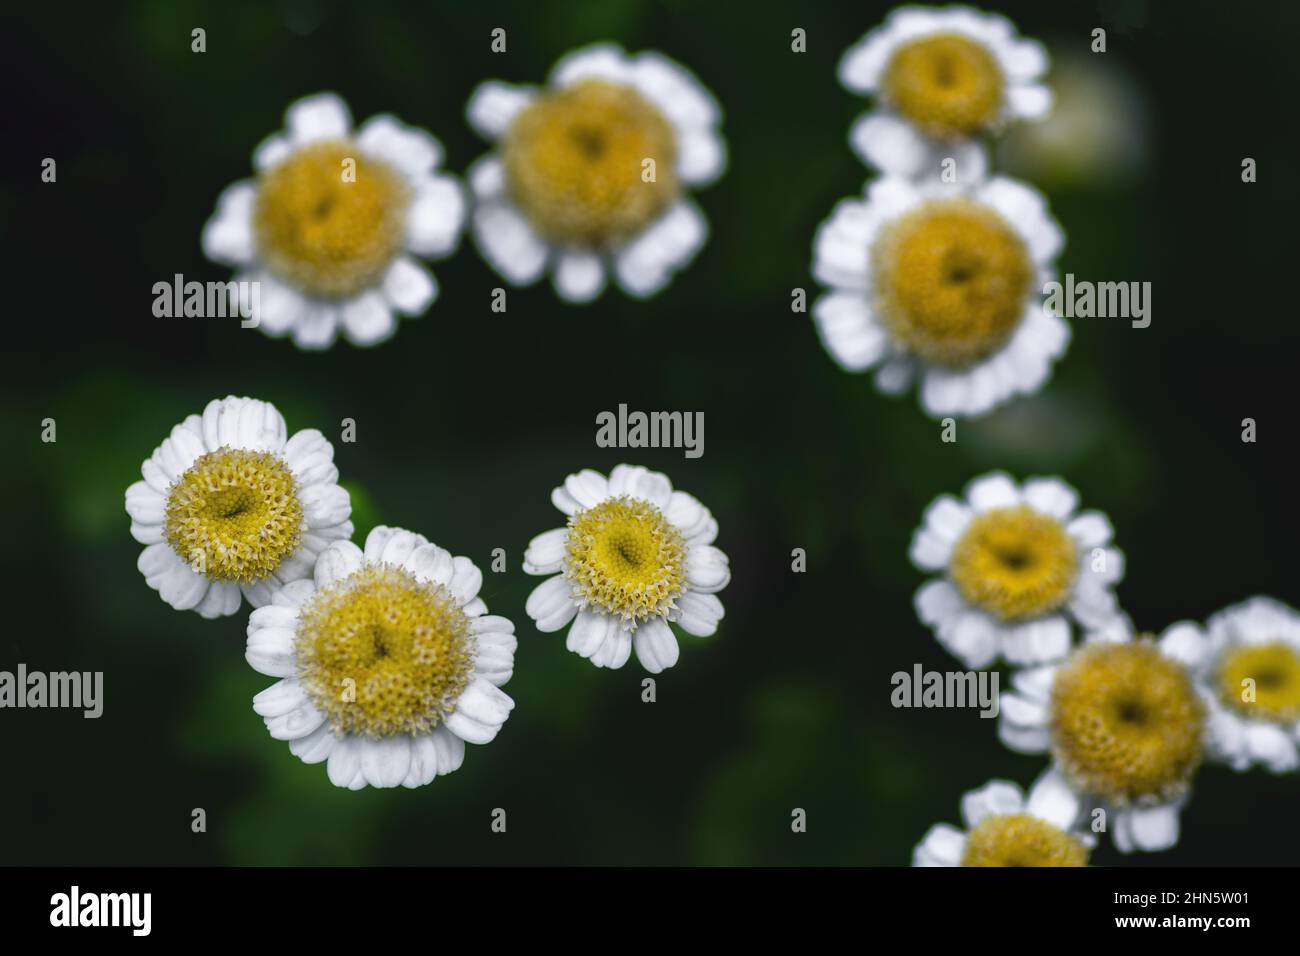 Mini margaritas fotografías e imágenes de alta resolución - Alamy